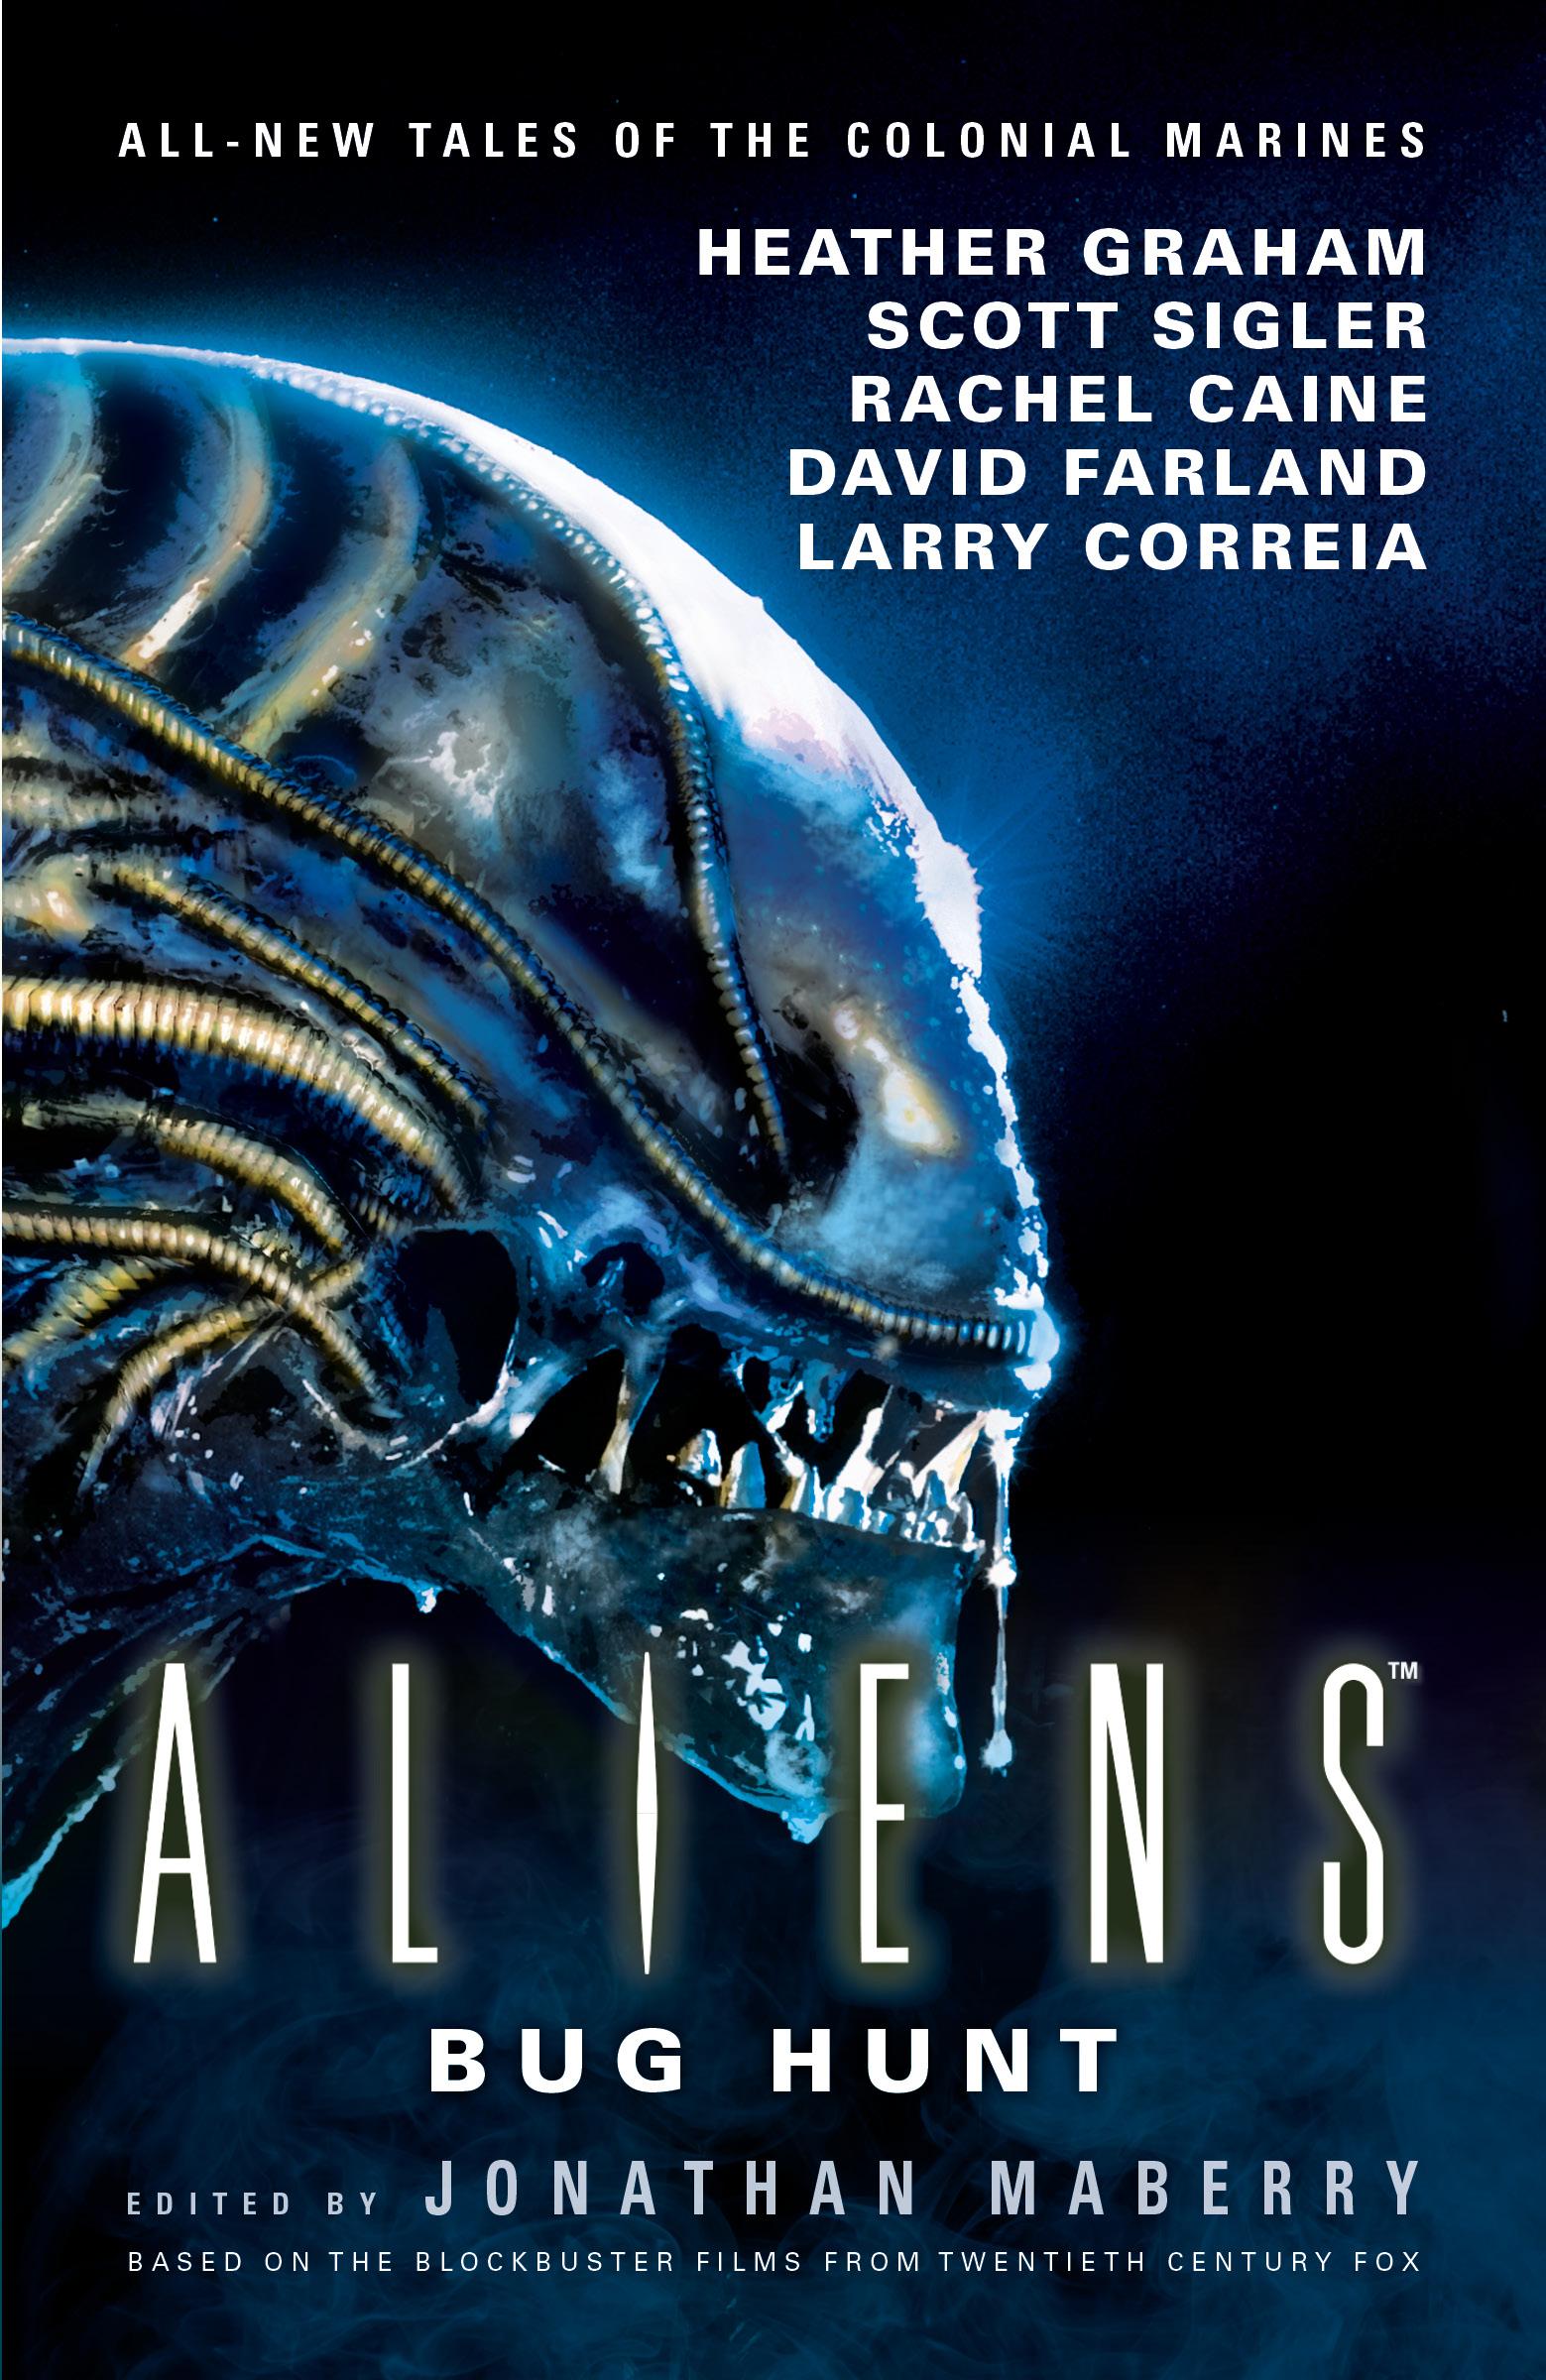 Aliens: Bug Hunt Review